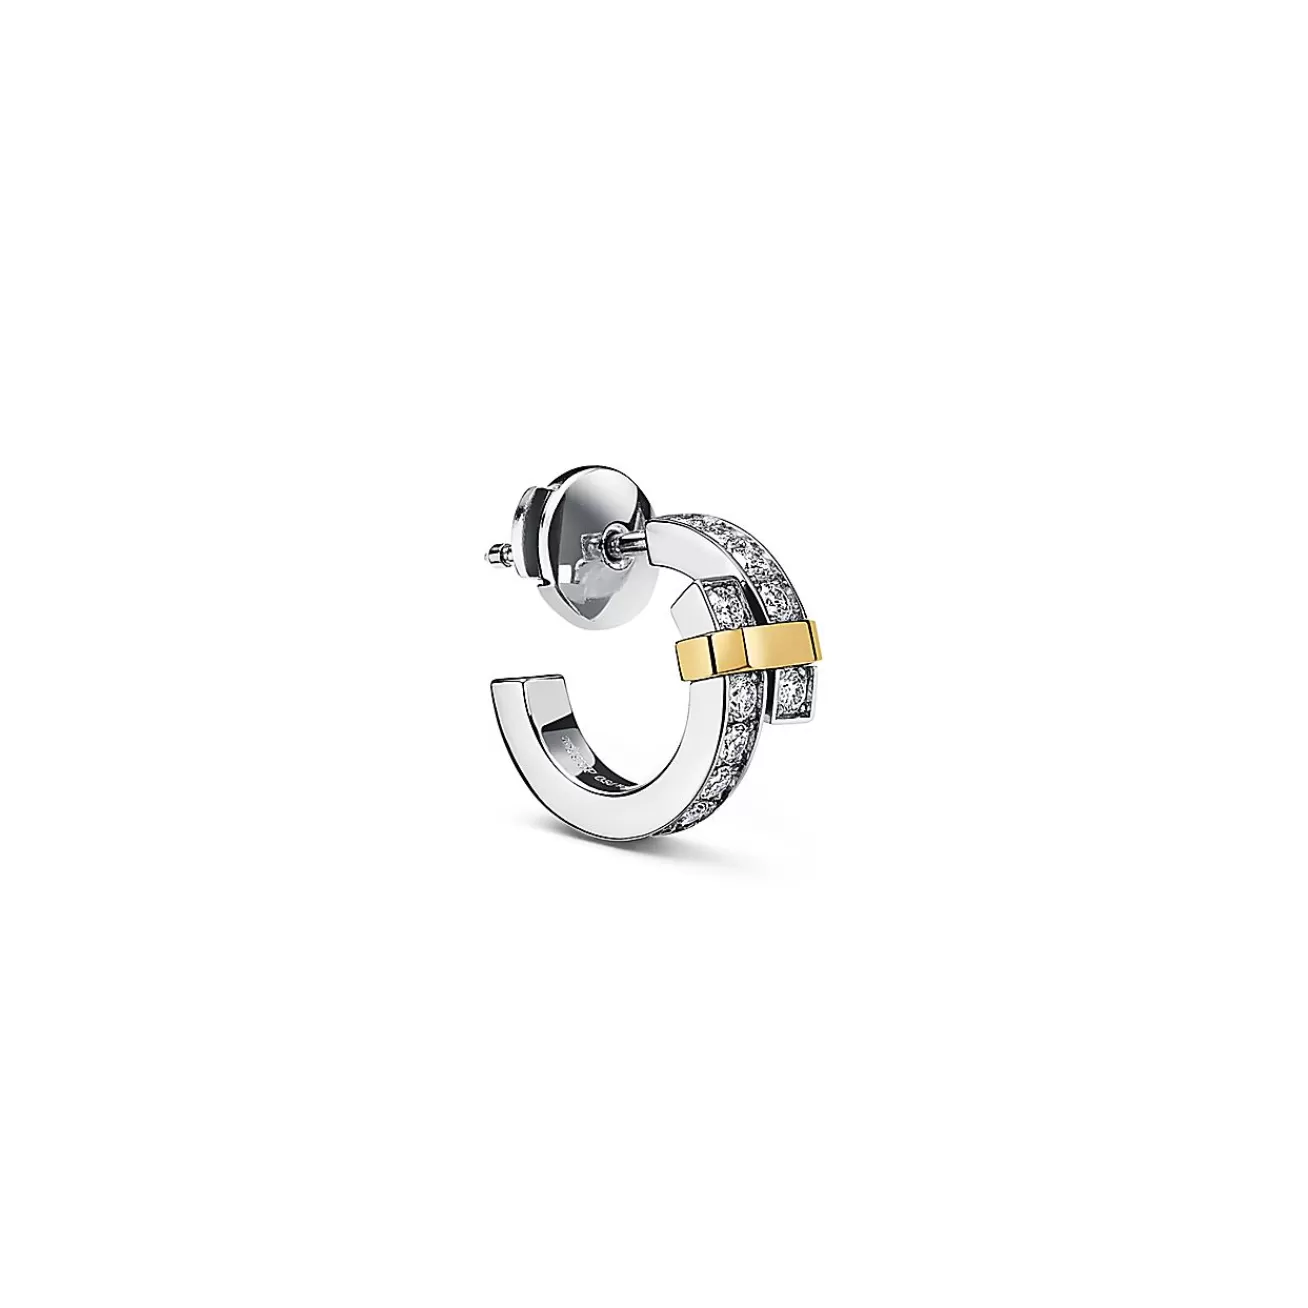 Tiffany & Co. Tiffany Edge Hoop Earrings in Platinum and Yellow Gold with Diamonds | ^ Earrings | Hoop Earrings